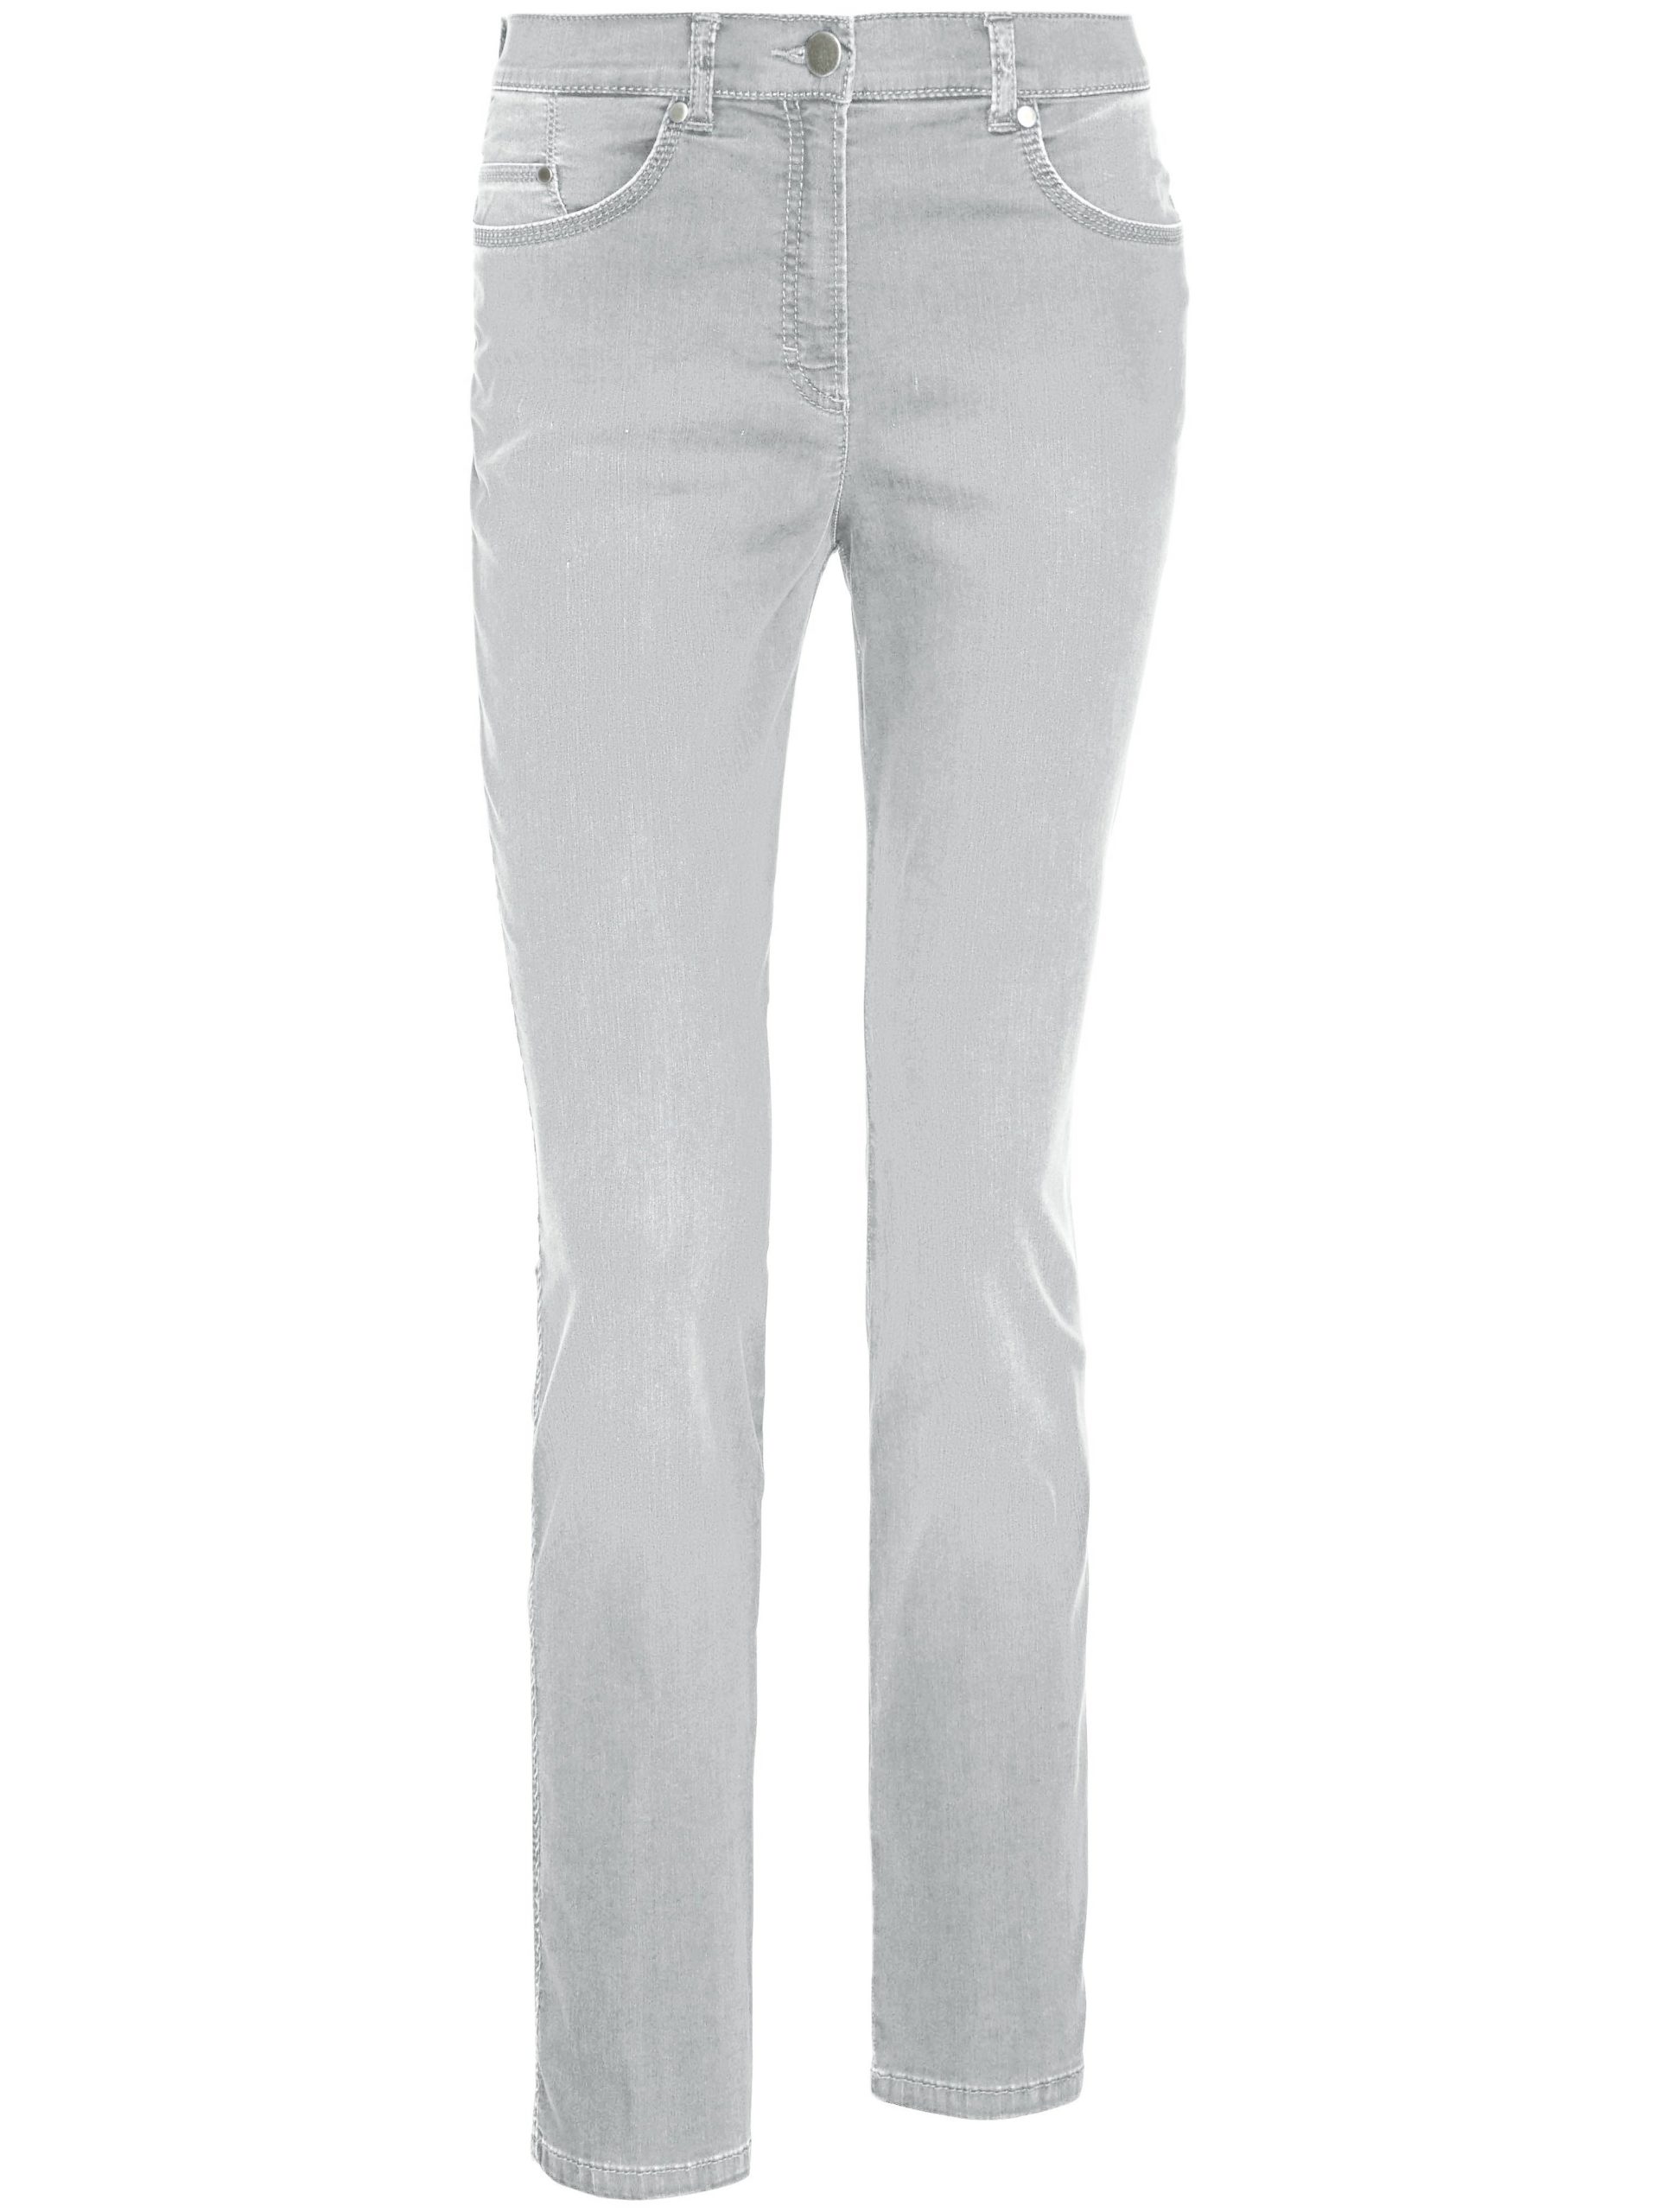 Modellerende Proform S Super Slim-jeans model Lea Van Raphaela by Brax denim Kopen